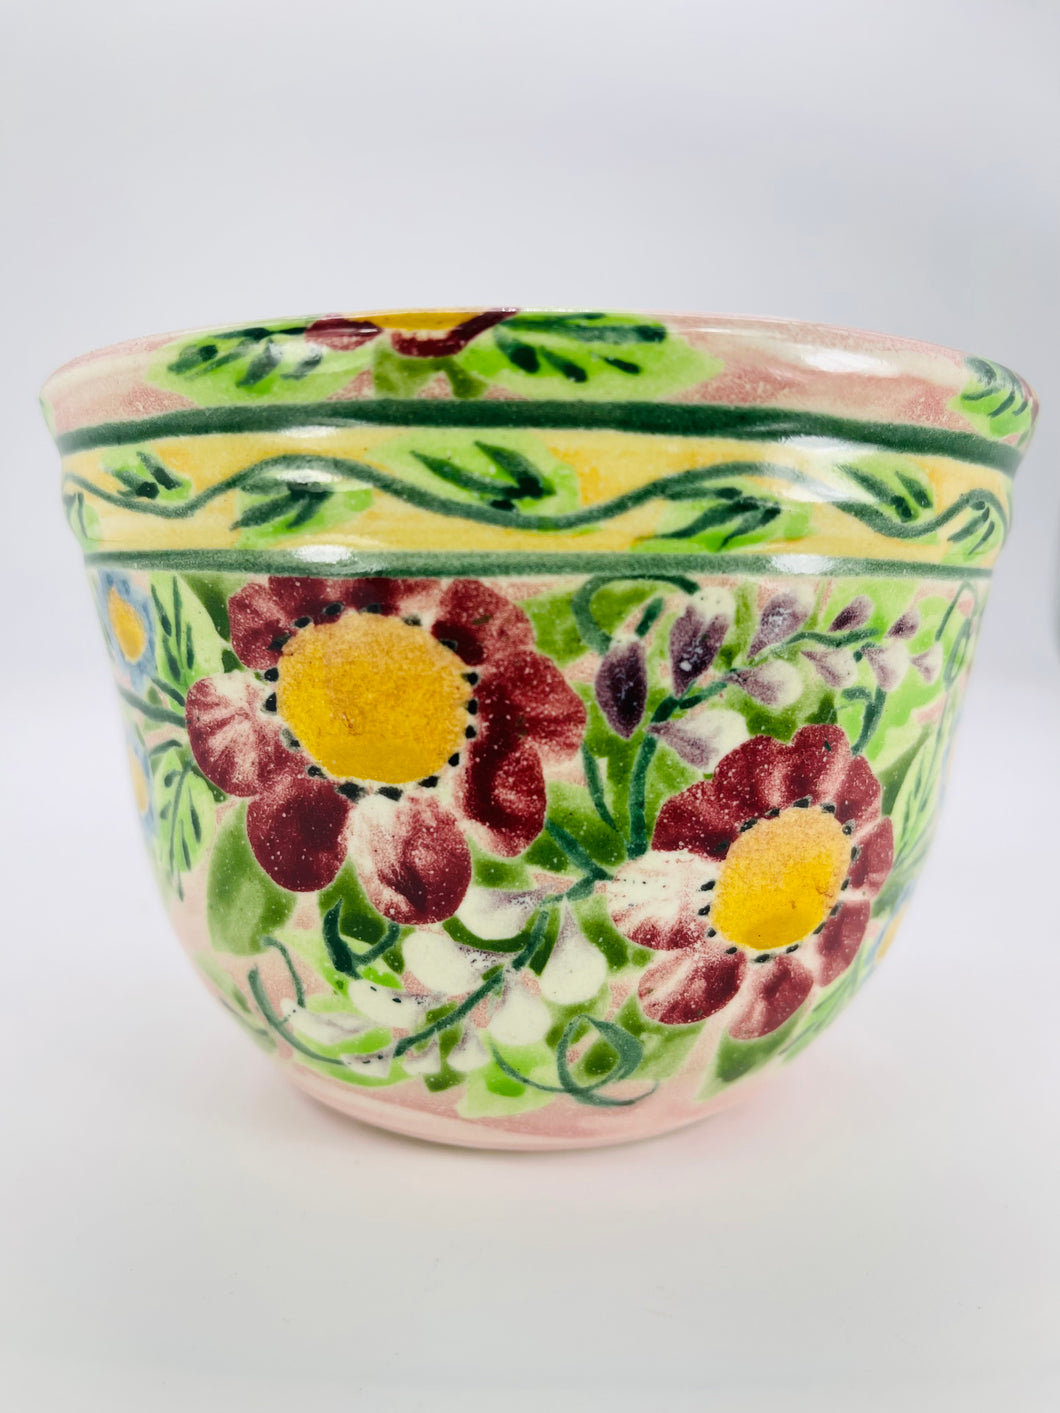 Vase / Planter